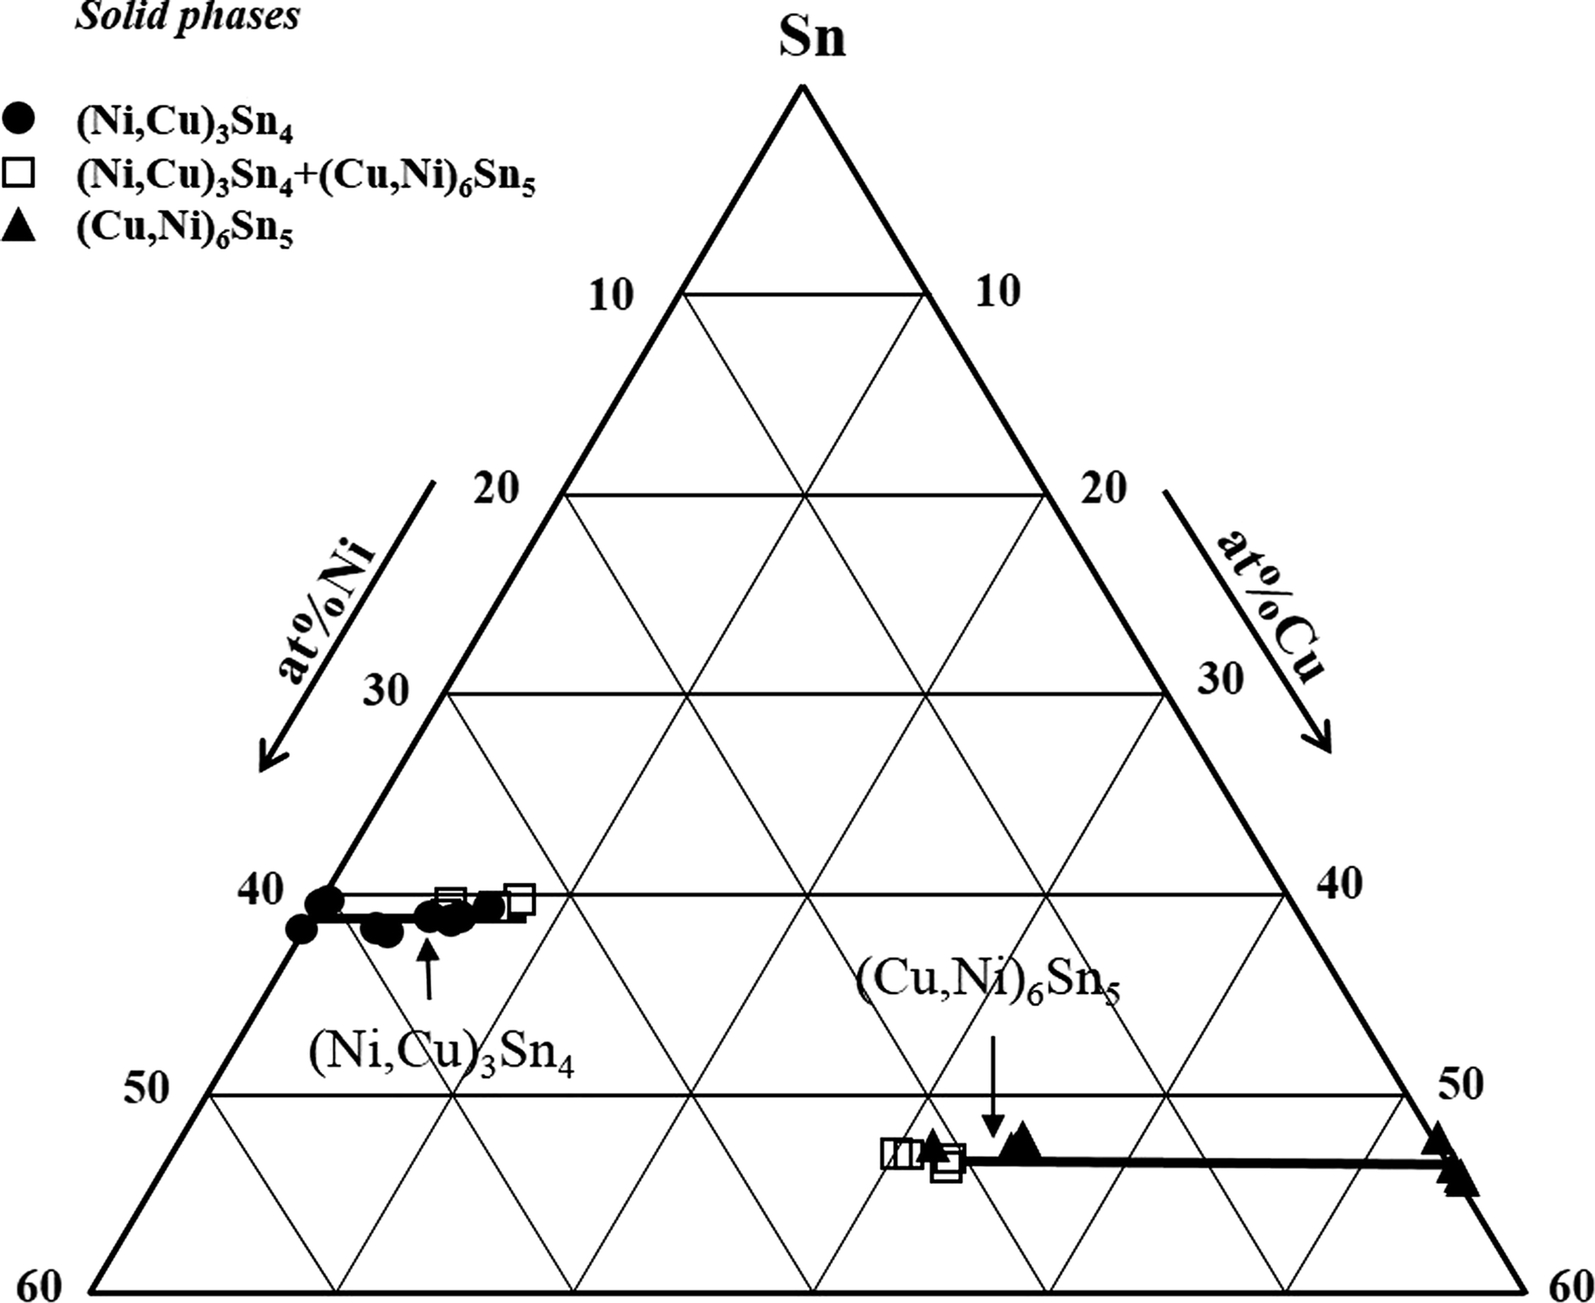 Cu Ni Phase Diagram Experimental Determination Of The Sn Cu Ni Phase Diagram For Pb Free